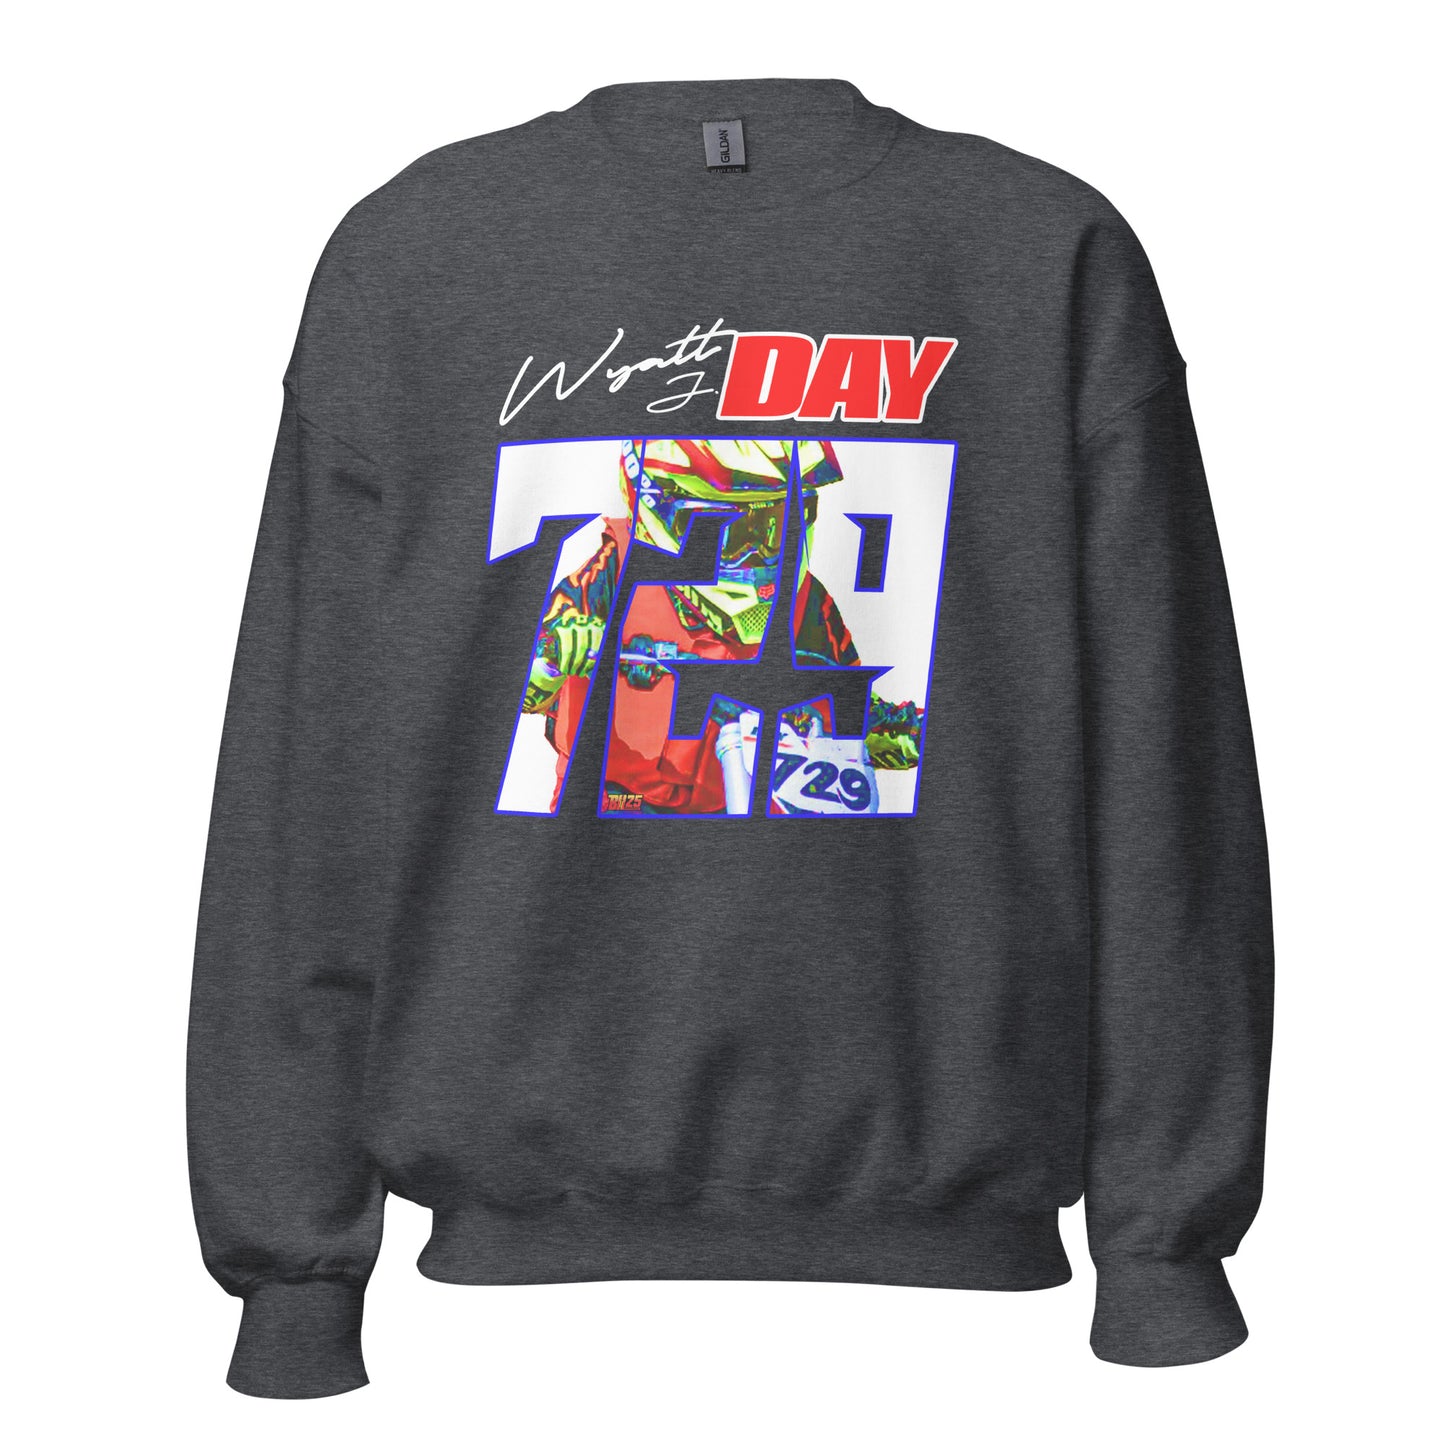 Wyatt Day 729 Crewneck Sweater